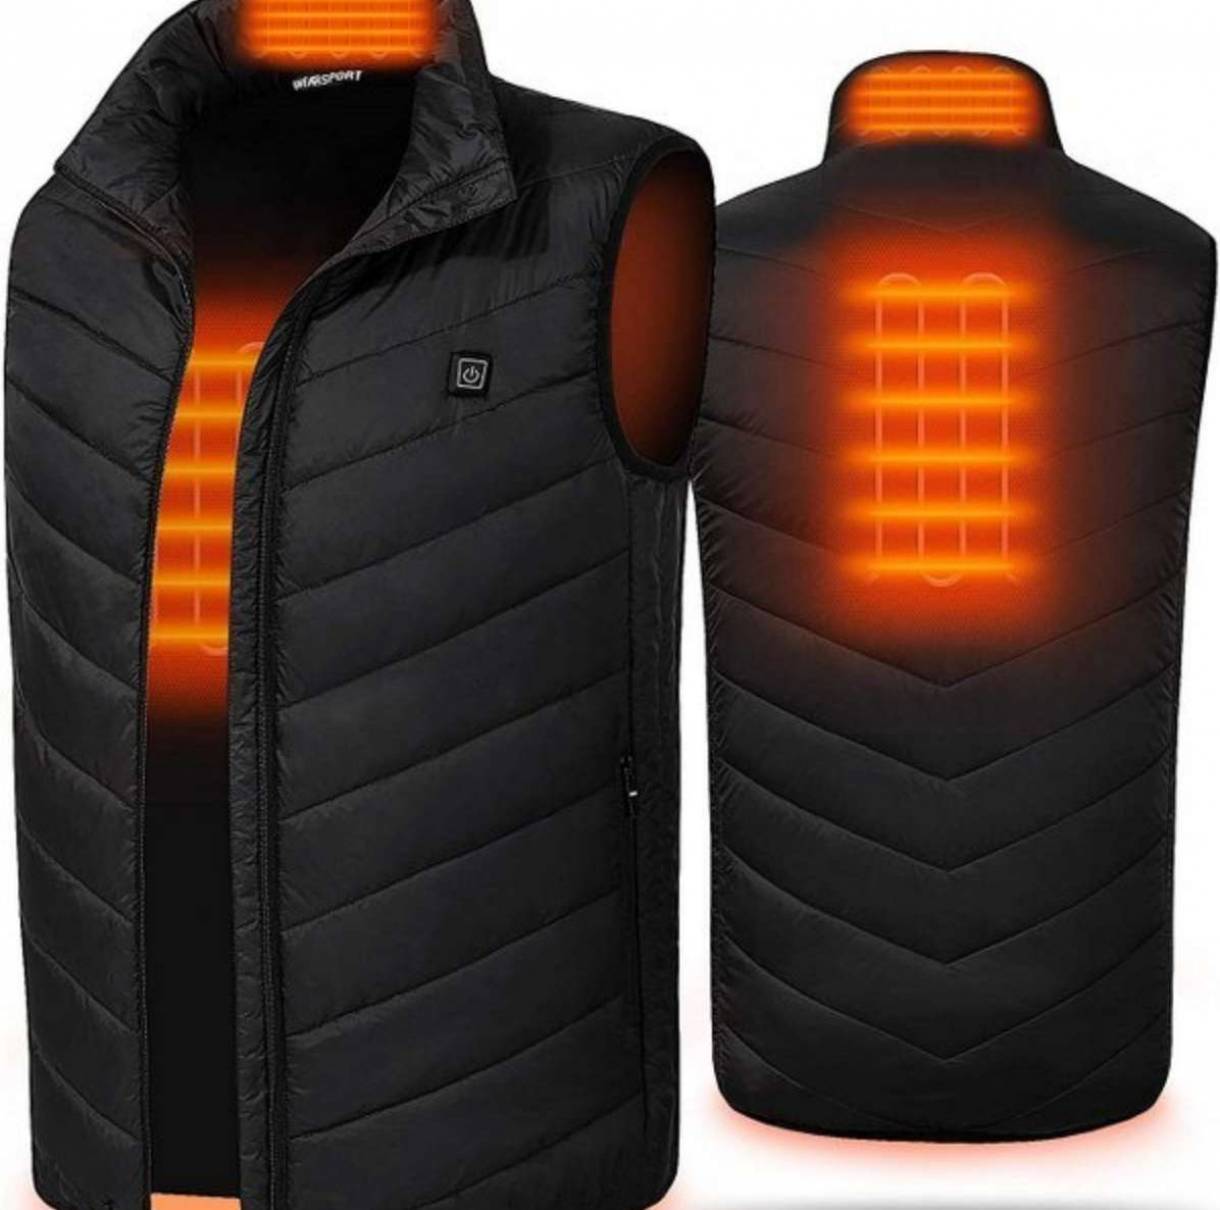 Are Heated Vest Safe